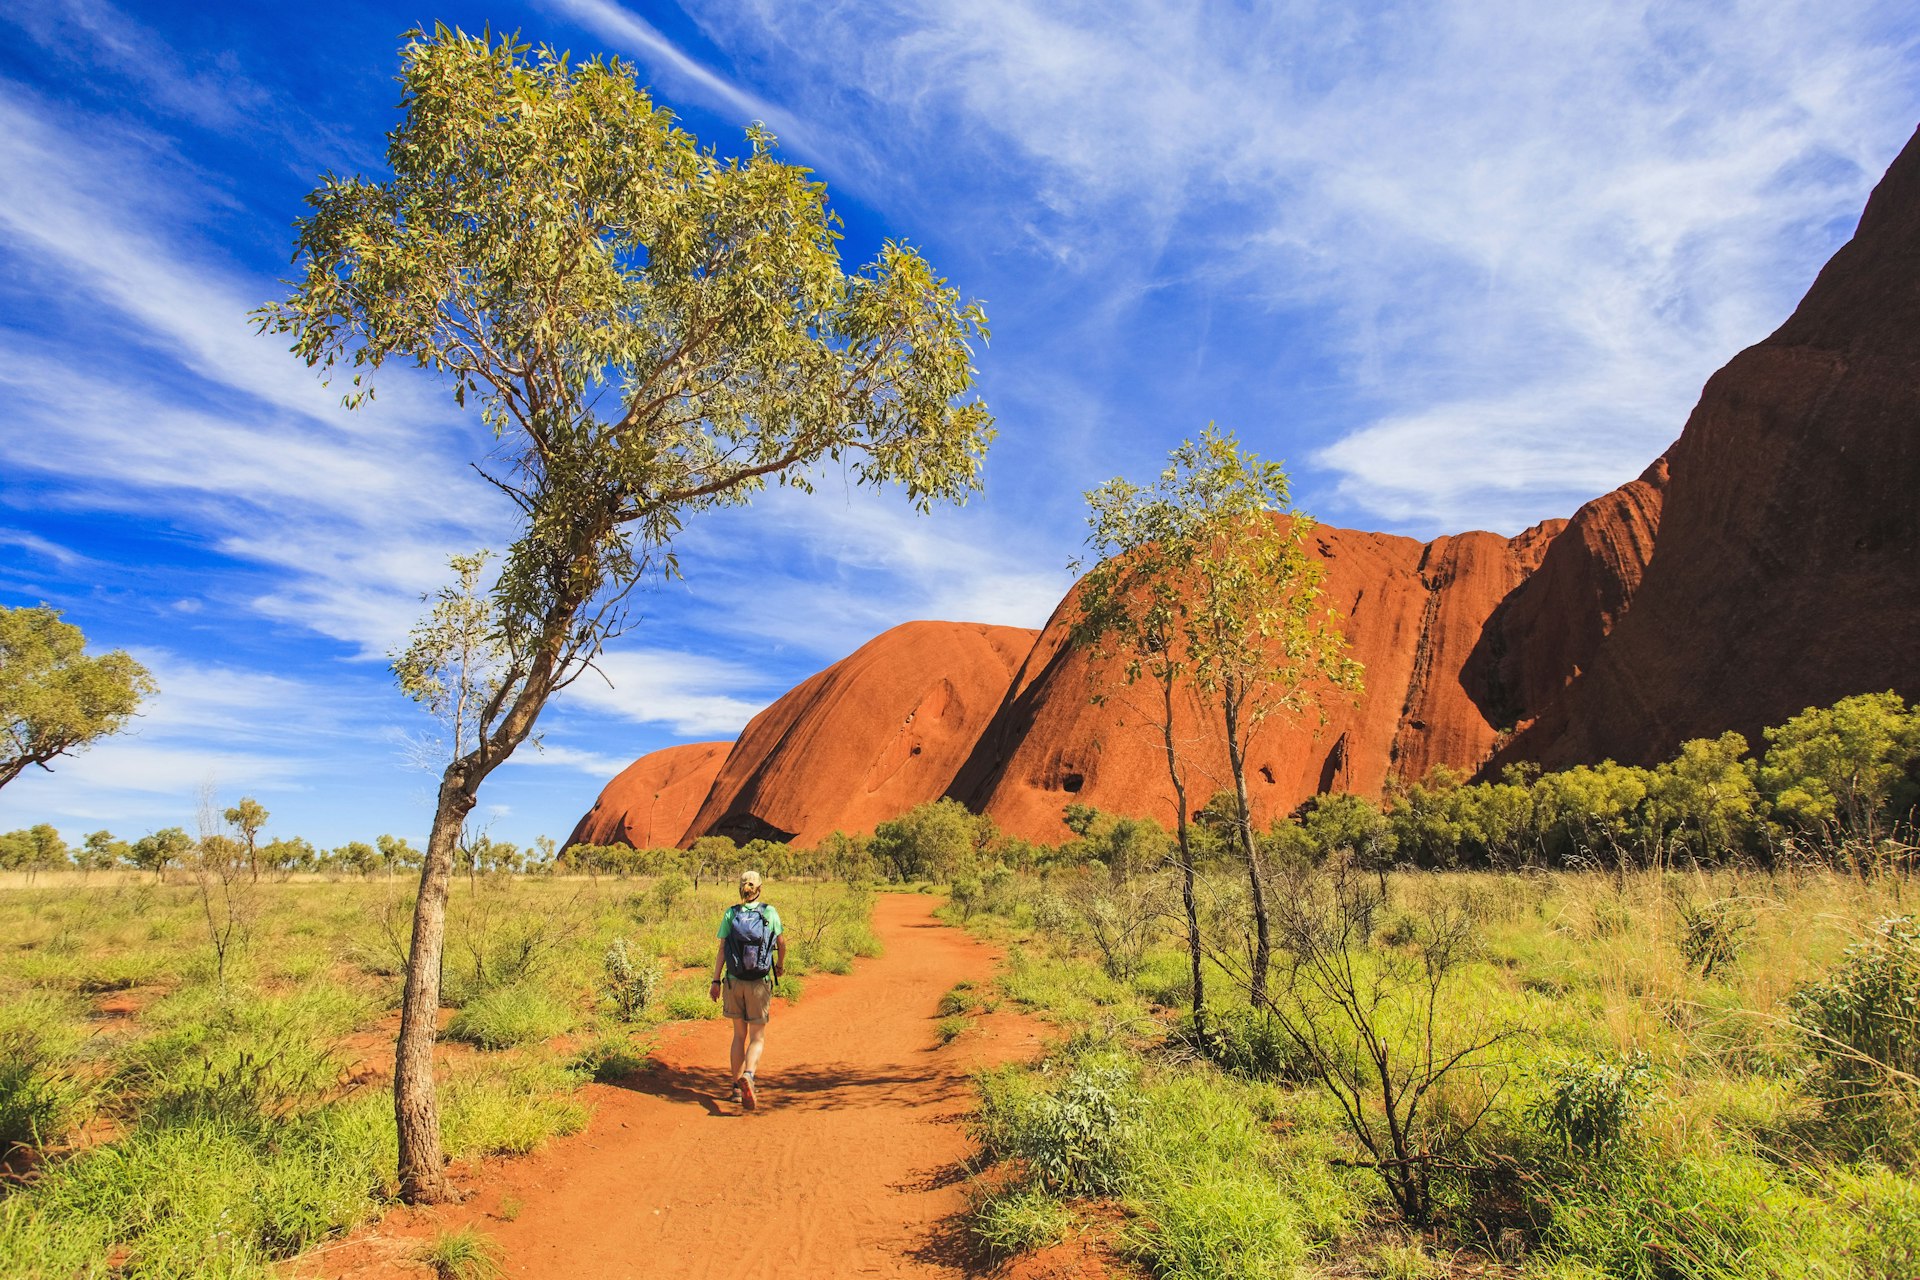 A person walks along a dirt path towards the red rocks of Uluru-Kata Tjuta National Park in Australia.